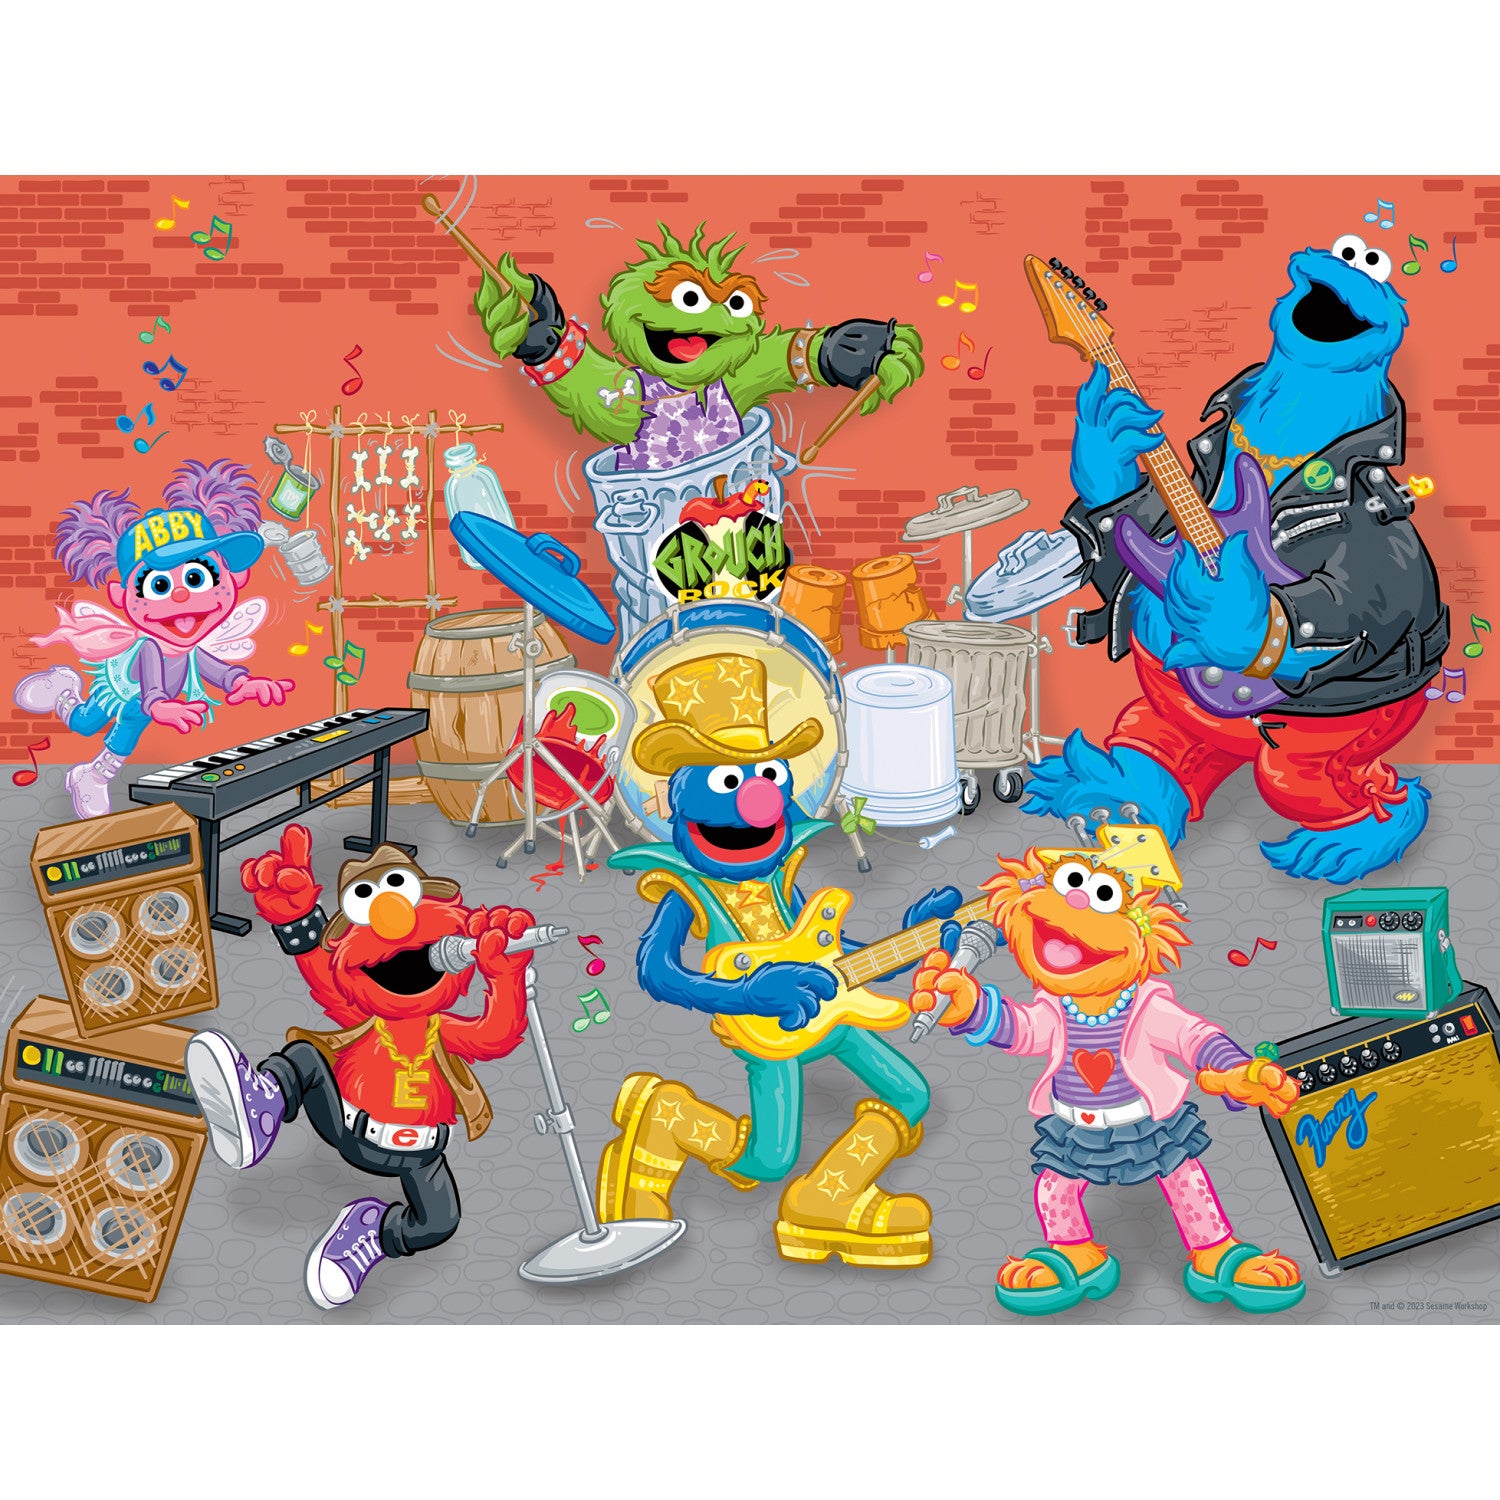 Sesame Street - Rock Stars 36 Piece Puzzle